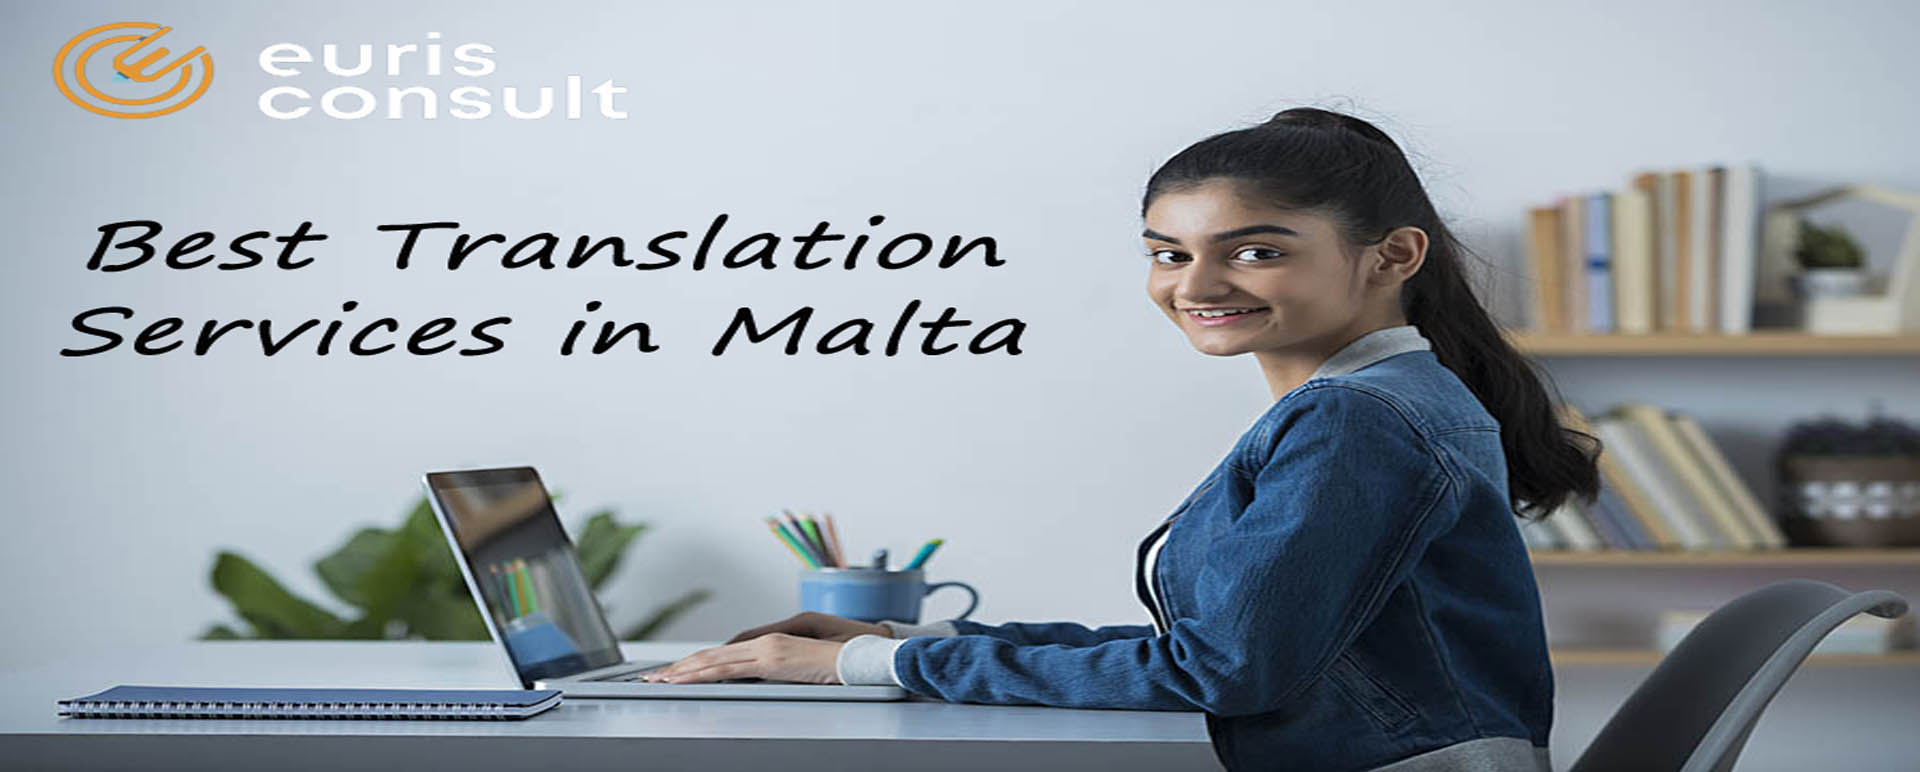 Best Translation Services in Malta